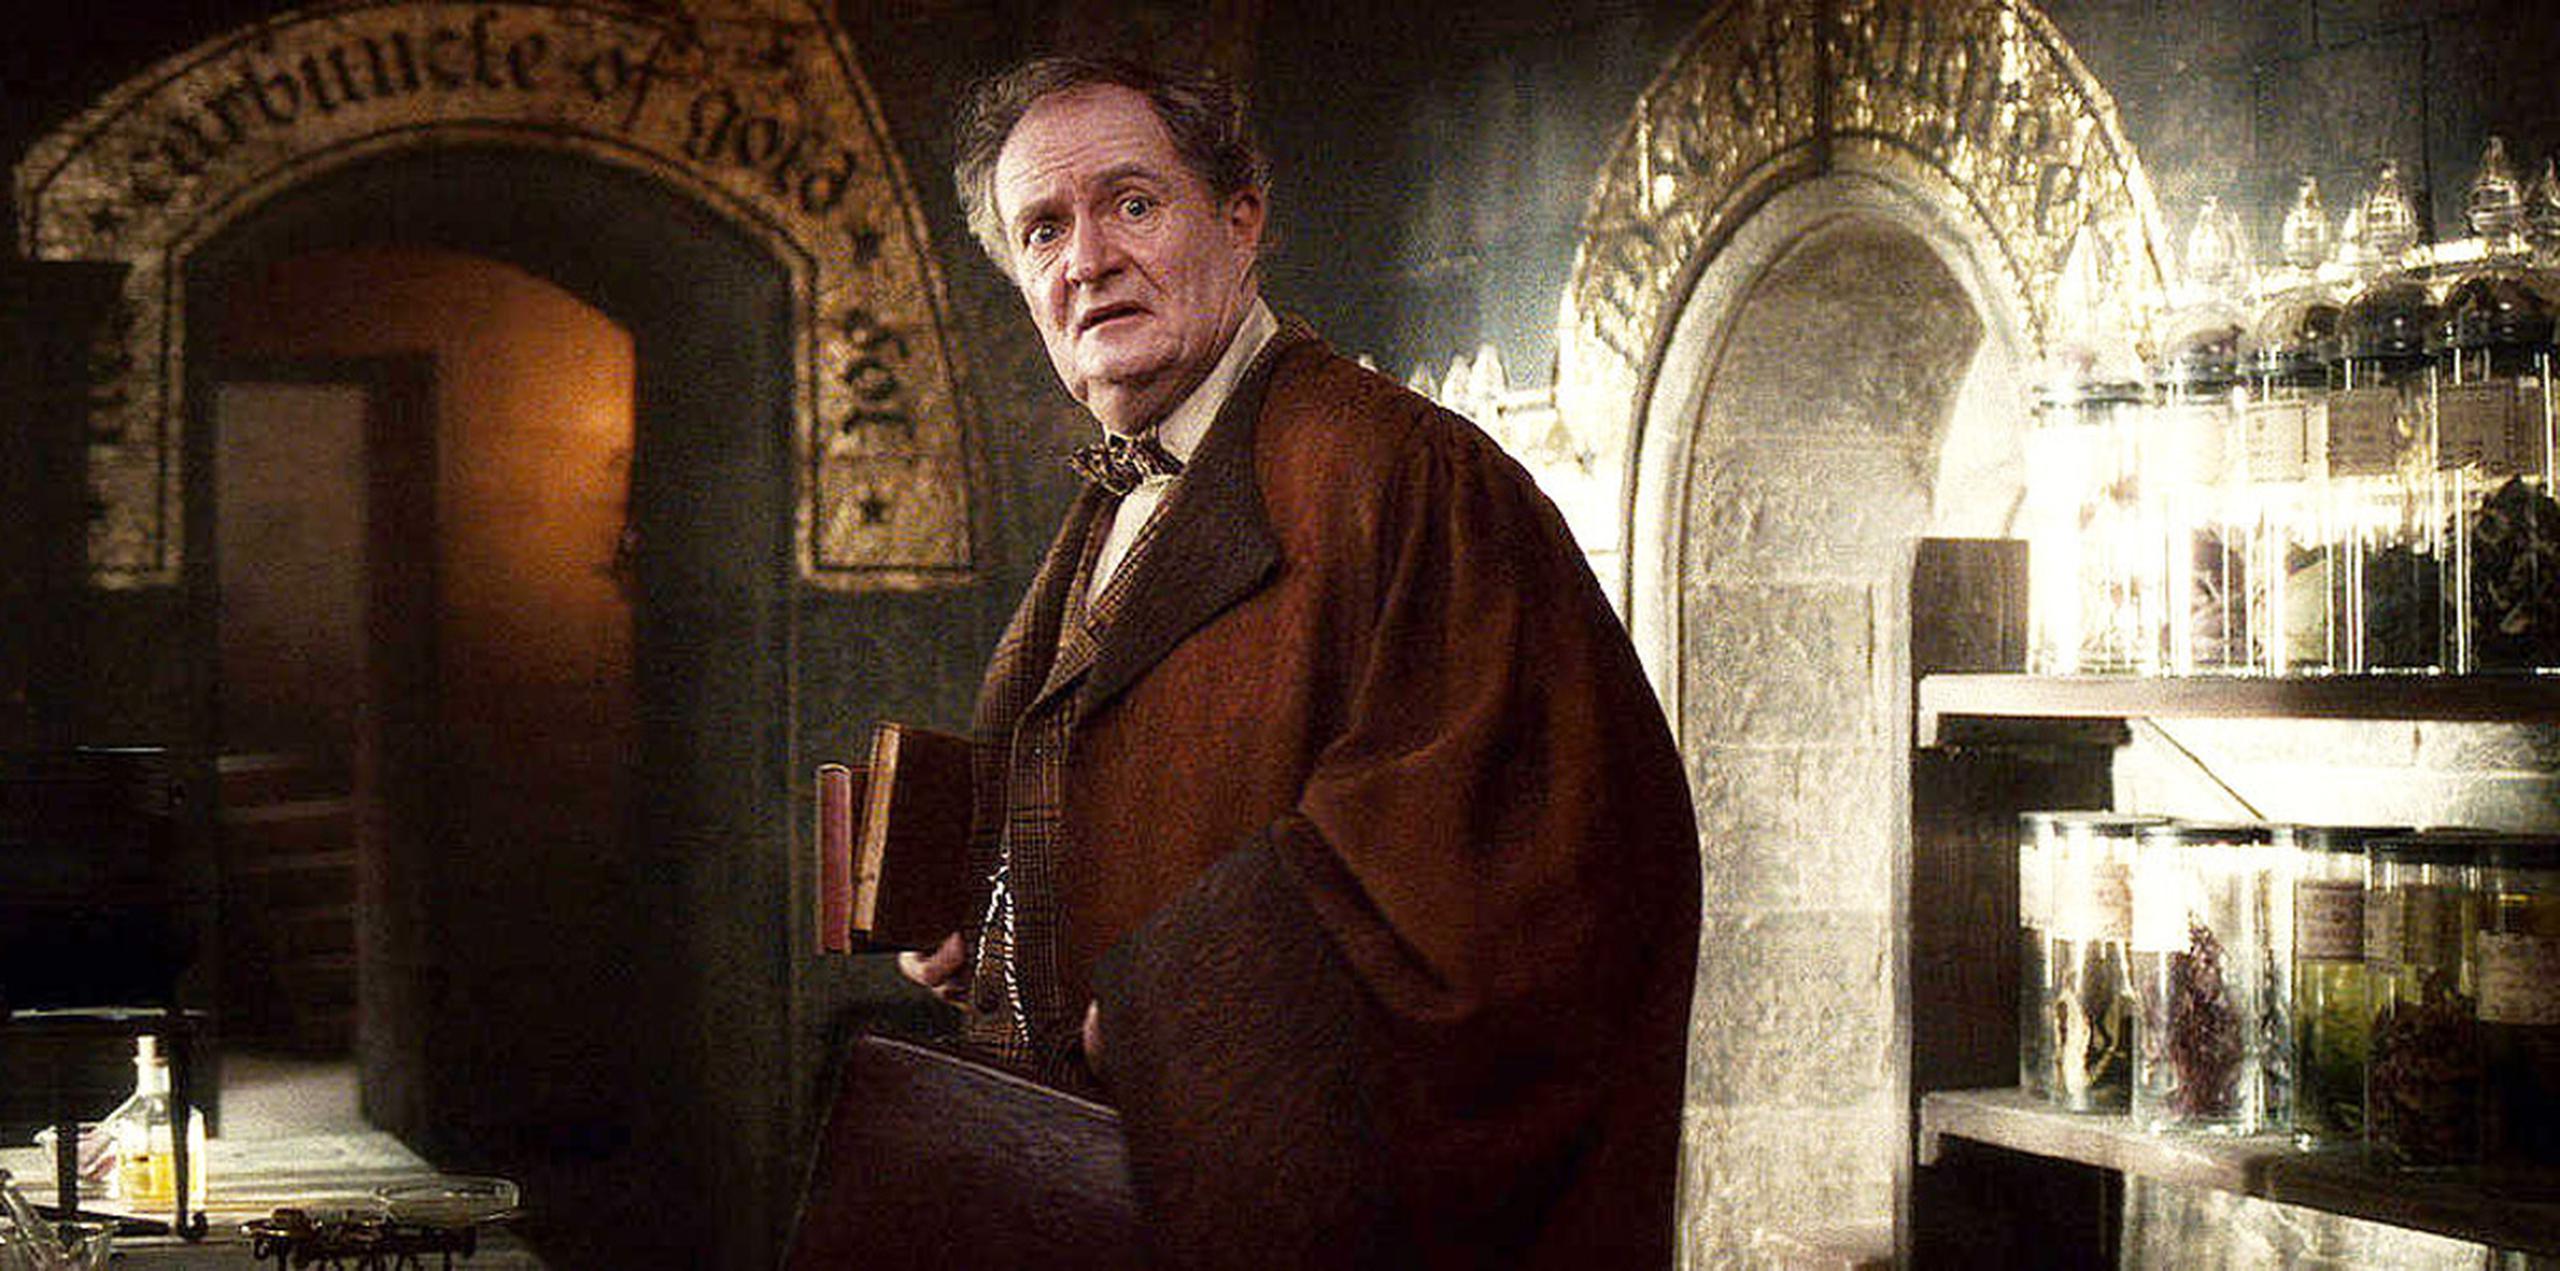 Broadbent interpretó al profesor "Horace Slughorn" en la saga de Harry Potter.